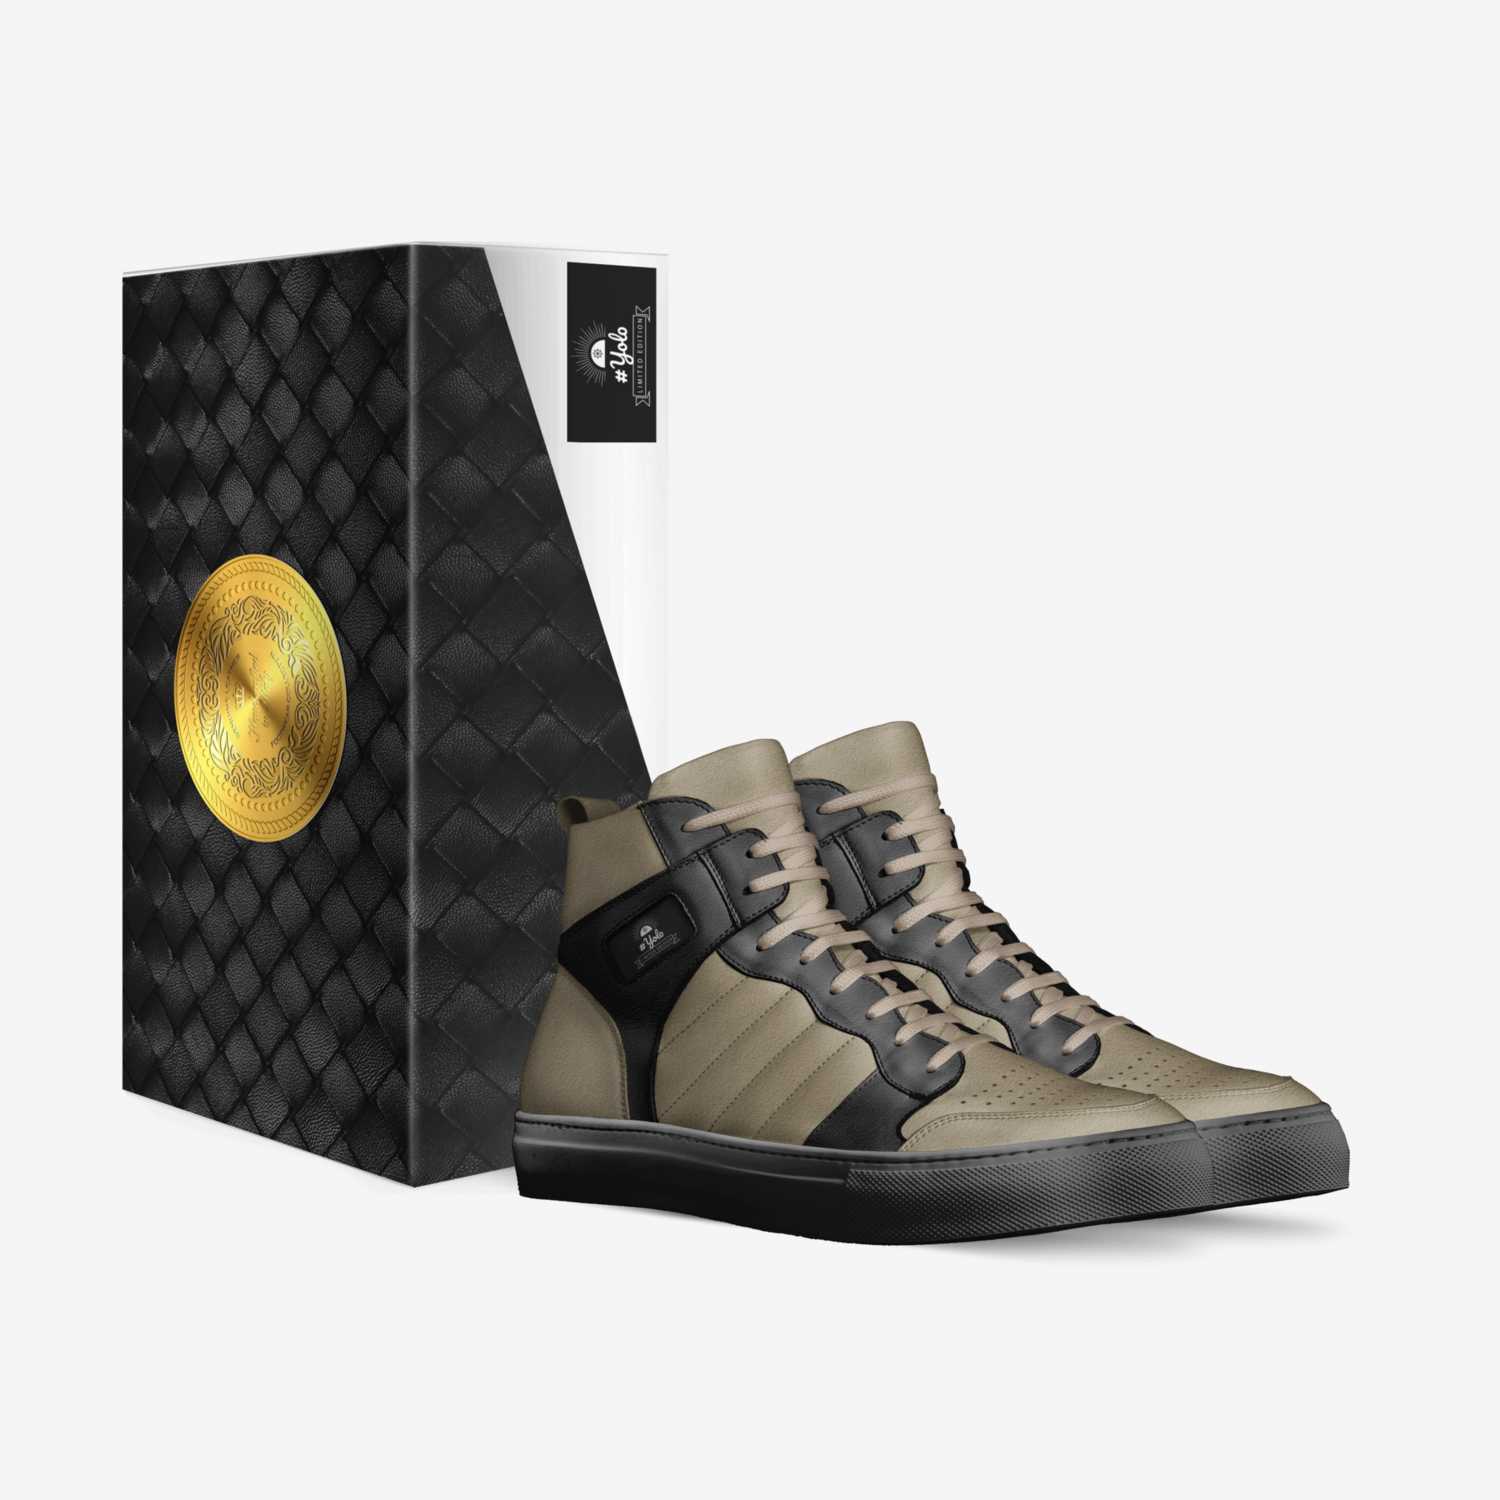 #Yolo custom made in Italy shoes by Rashid X | Box view